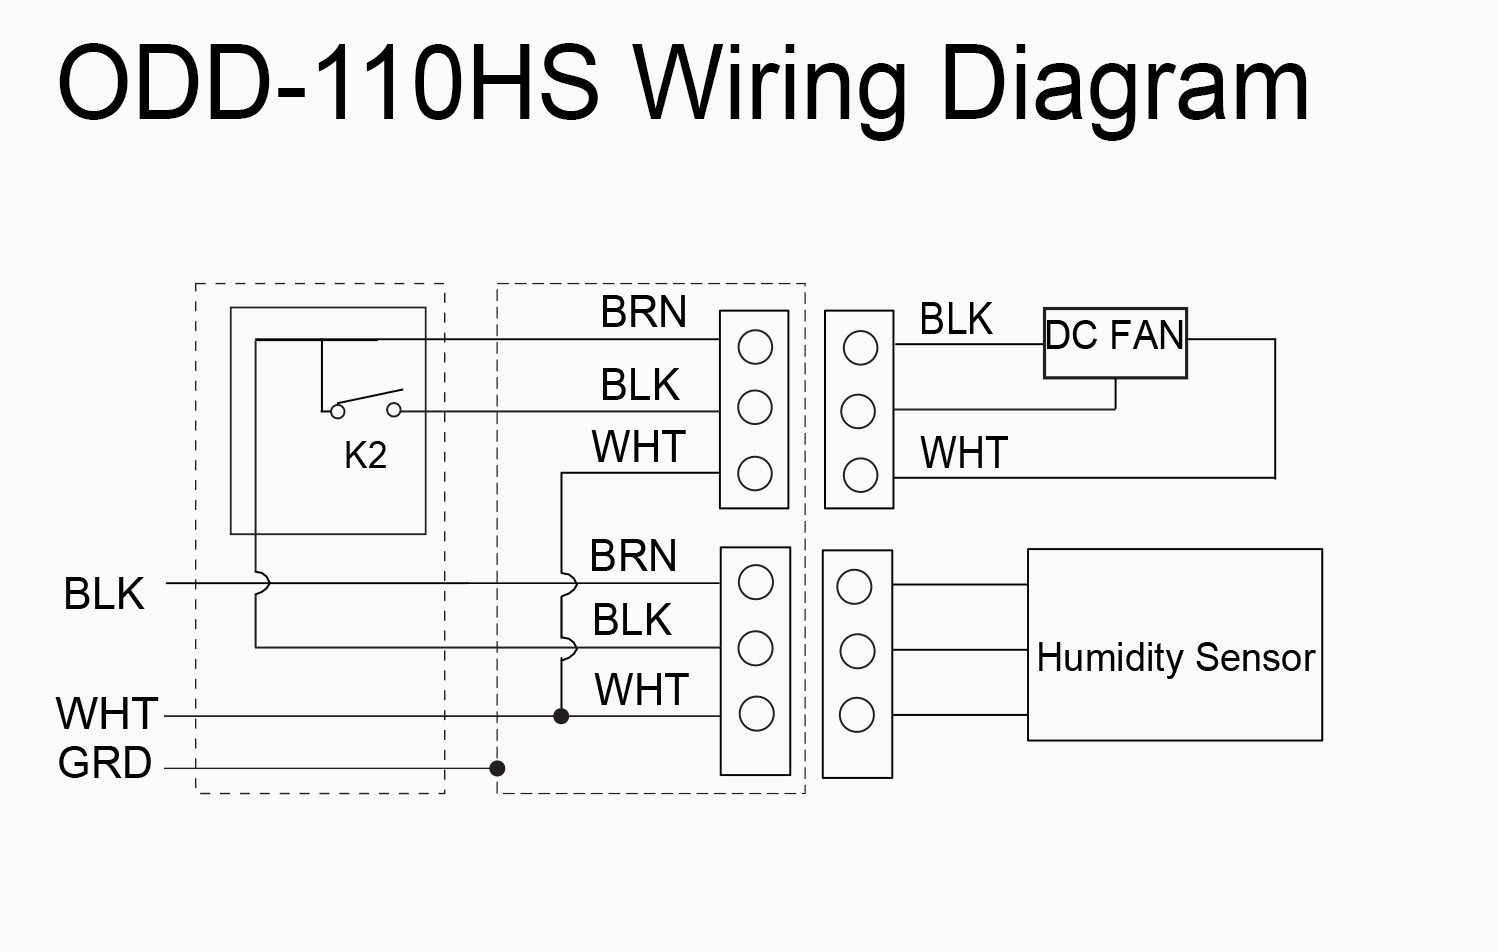 ODD 110HS Wiring Diagram